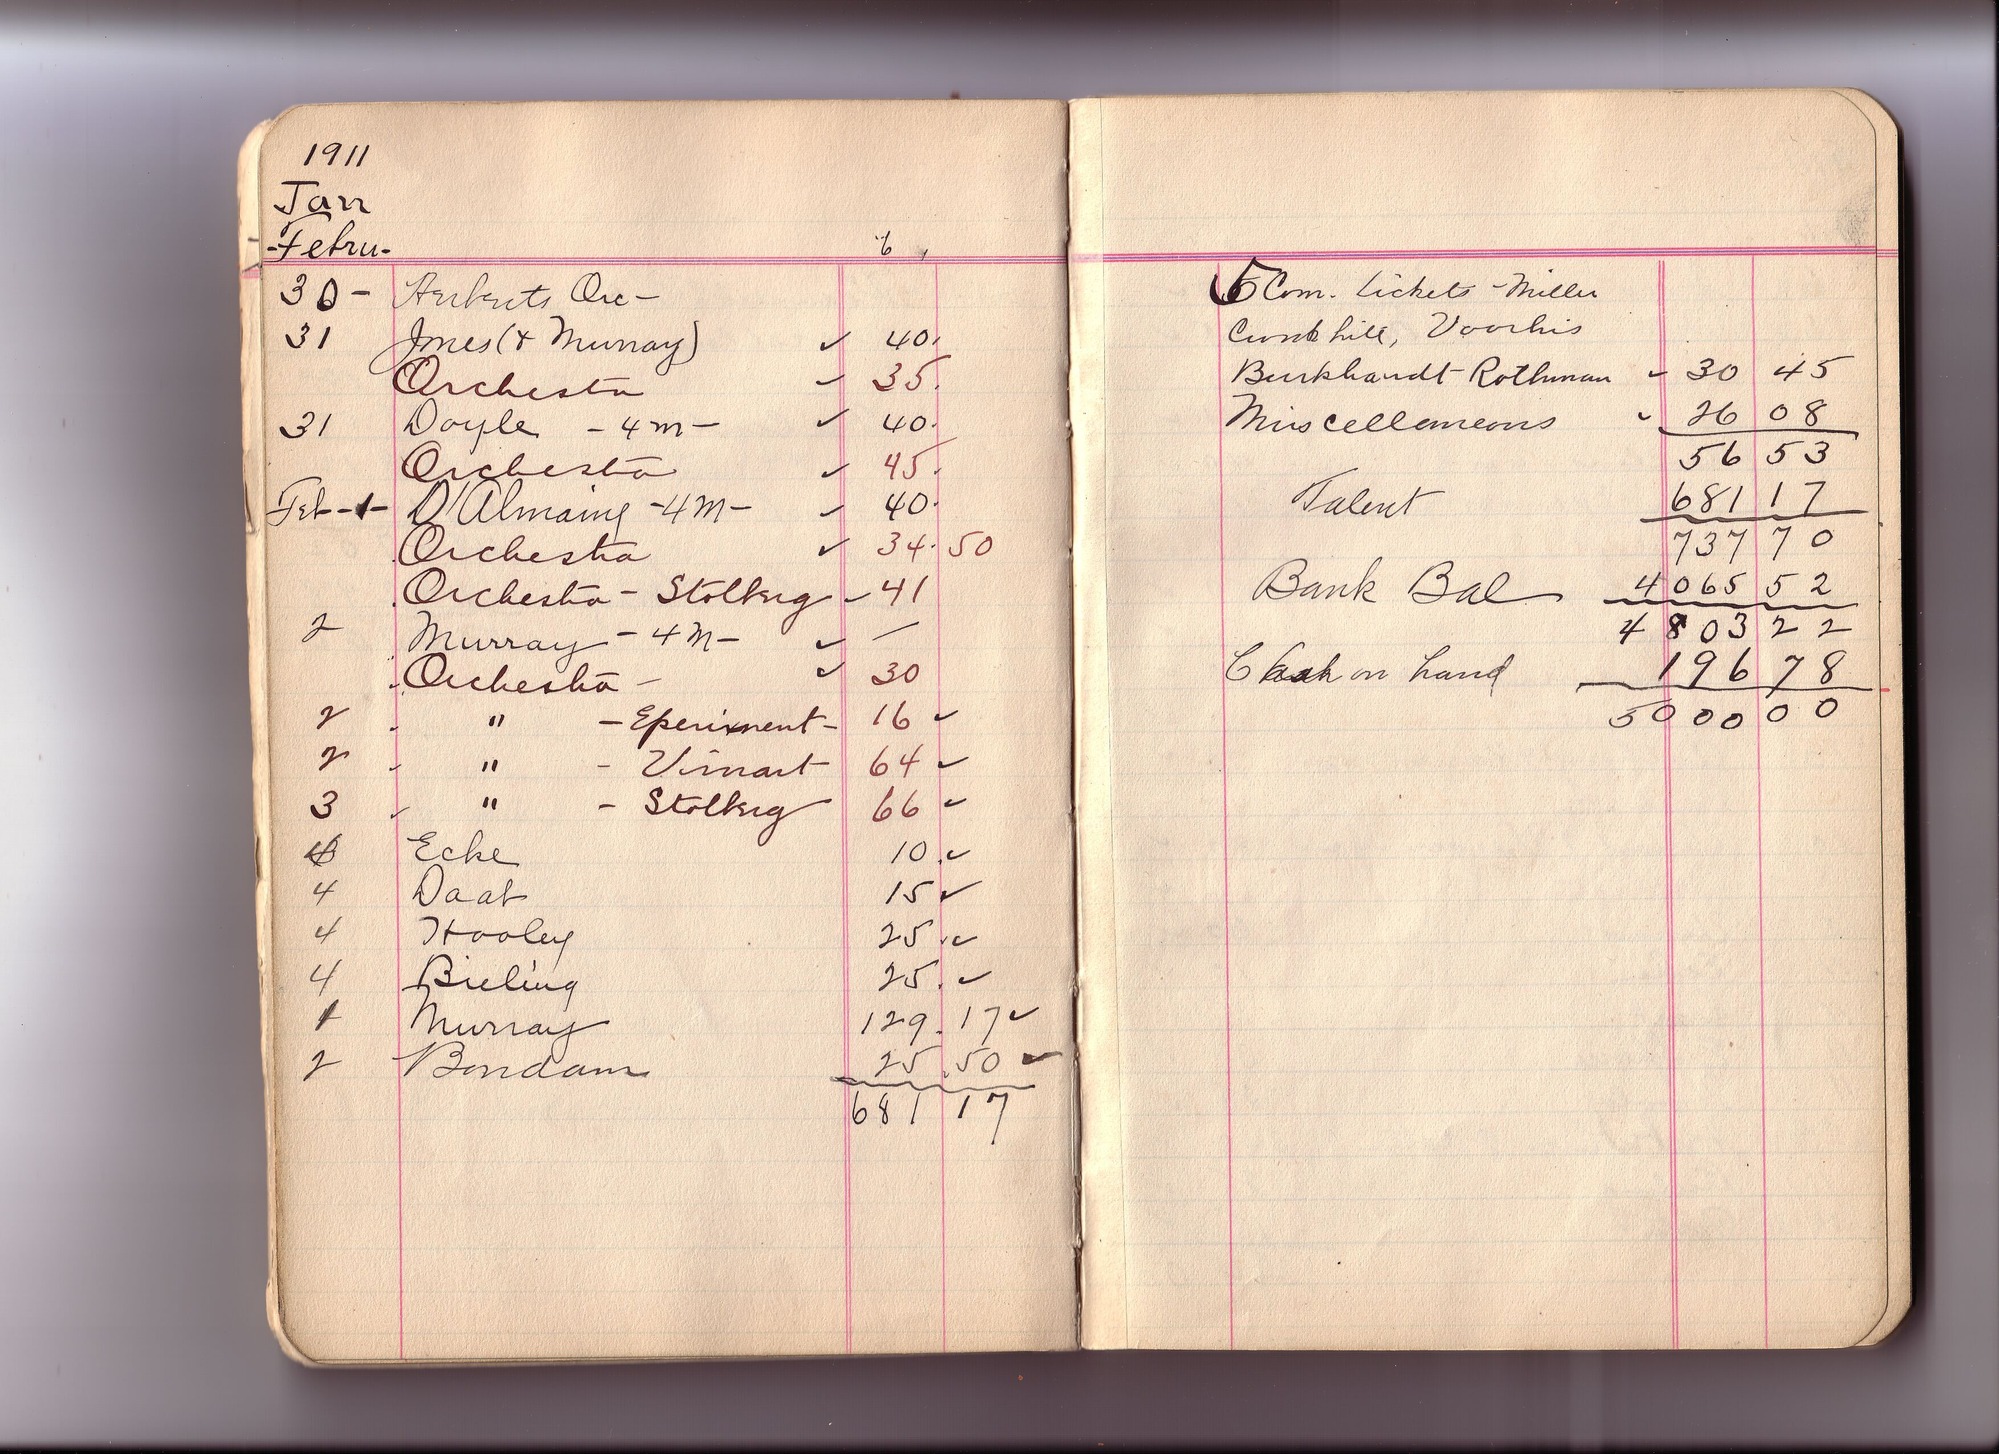 Thomas Edison's New York City Recording Studio Cash Book 07 (of 21), Image 12 (of 50).